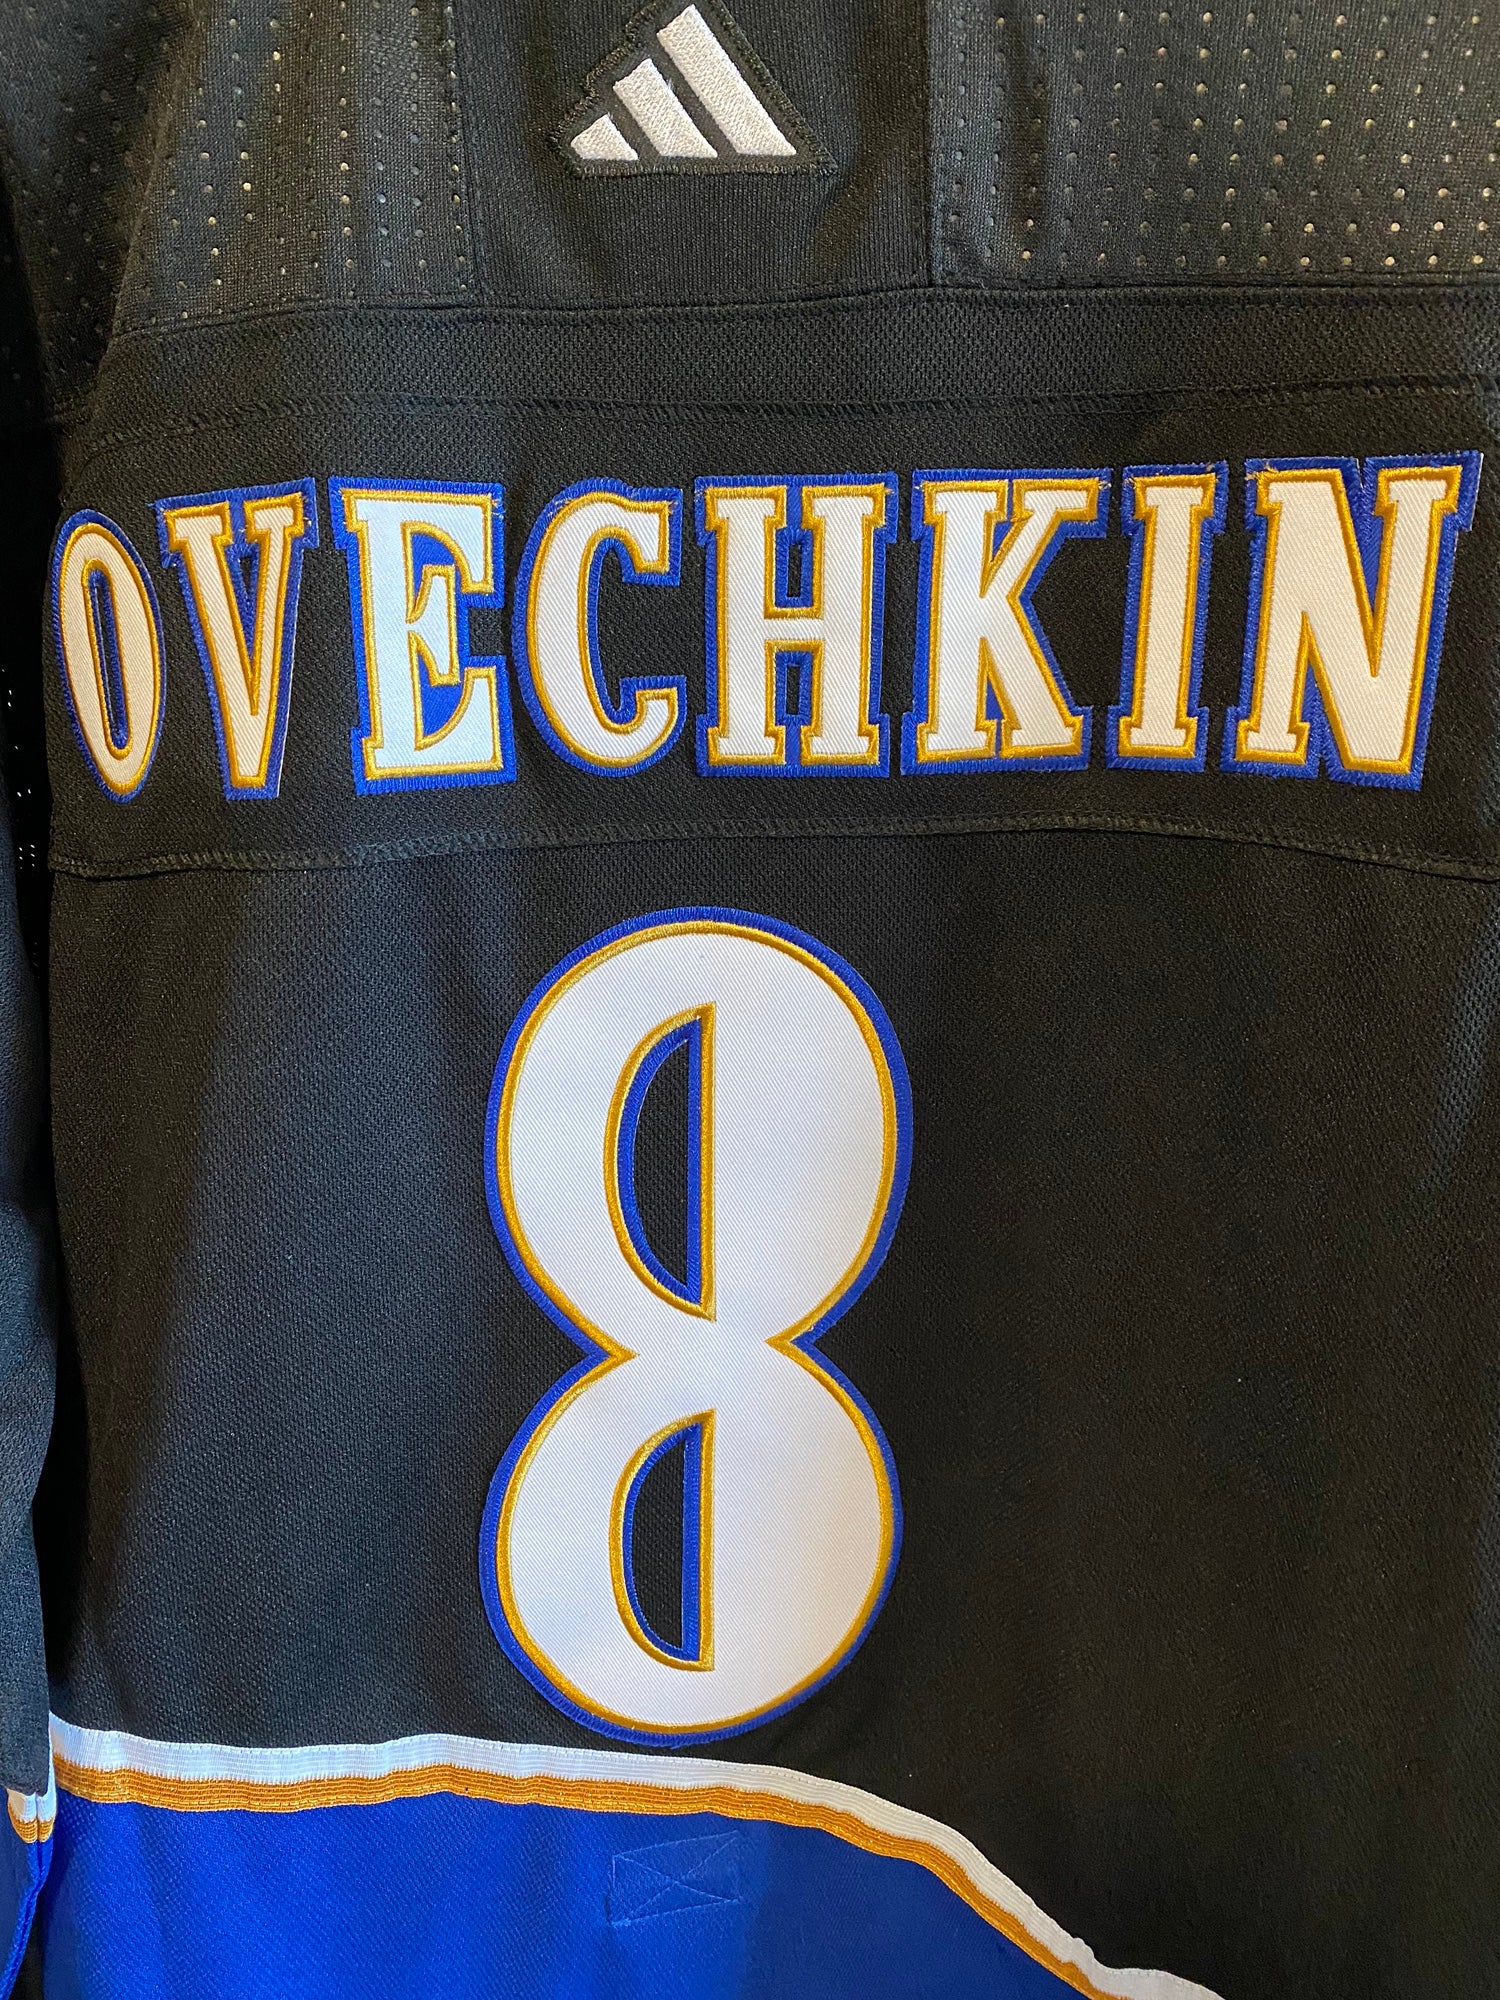 ovechkin alternate jersey